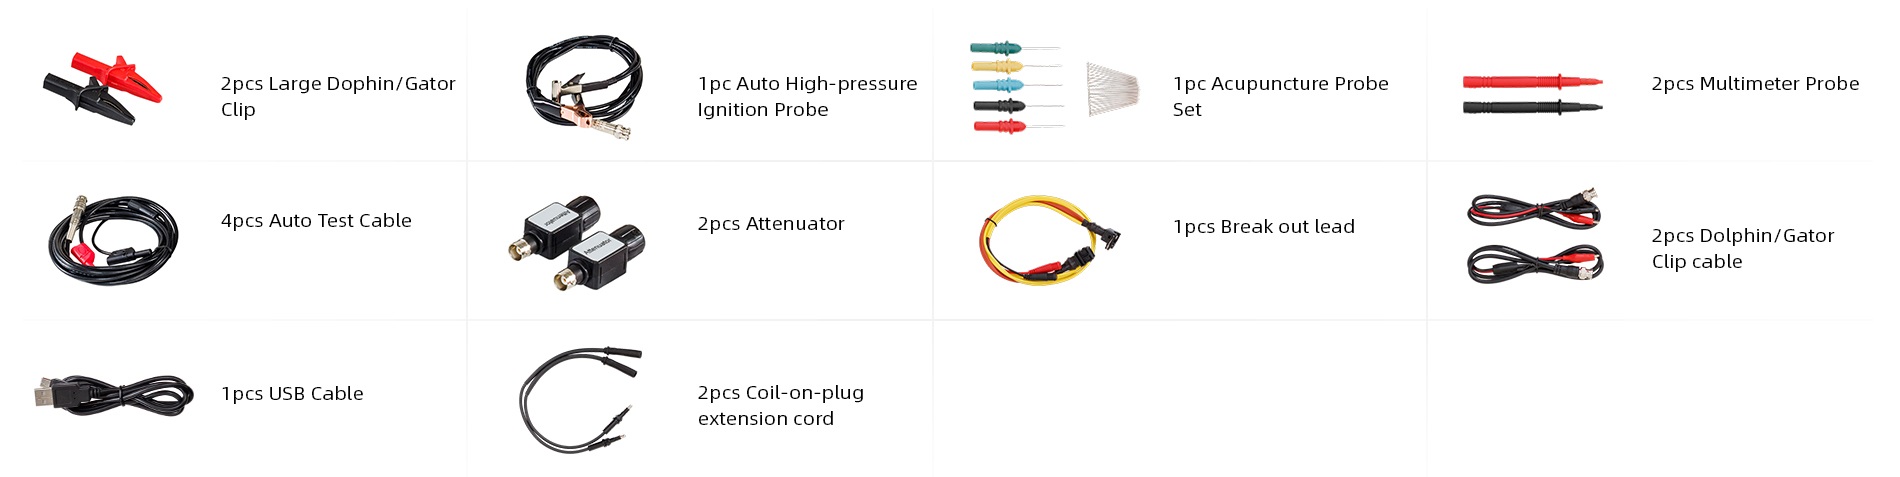 Foxwell OS100 Oscilloscope Kit Includes: